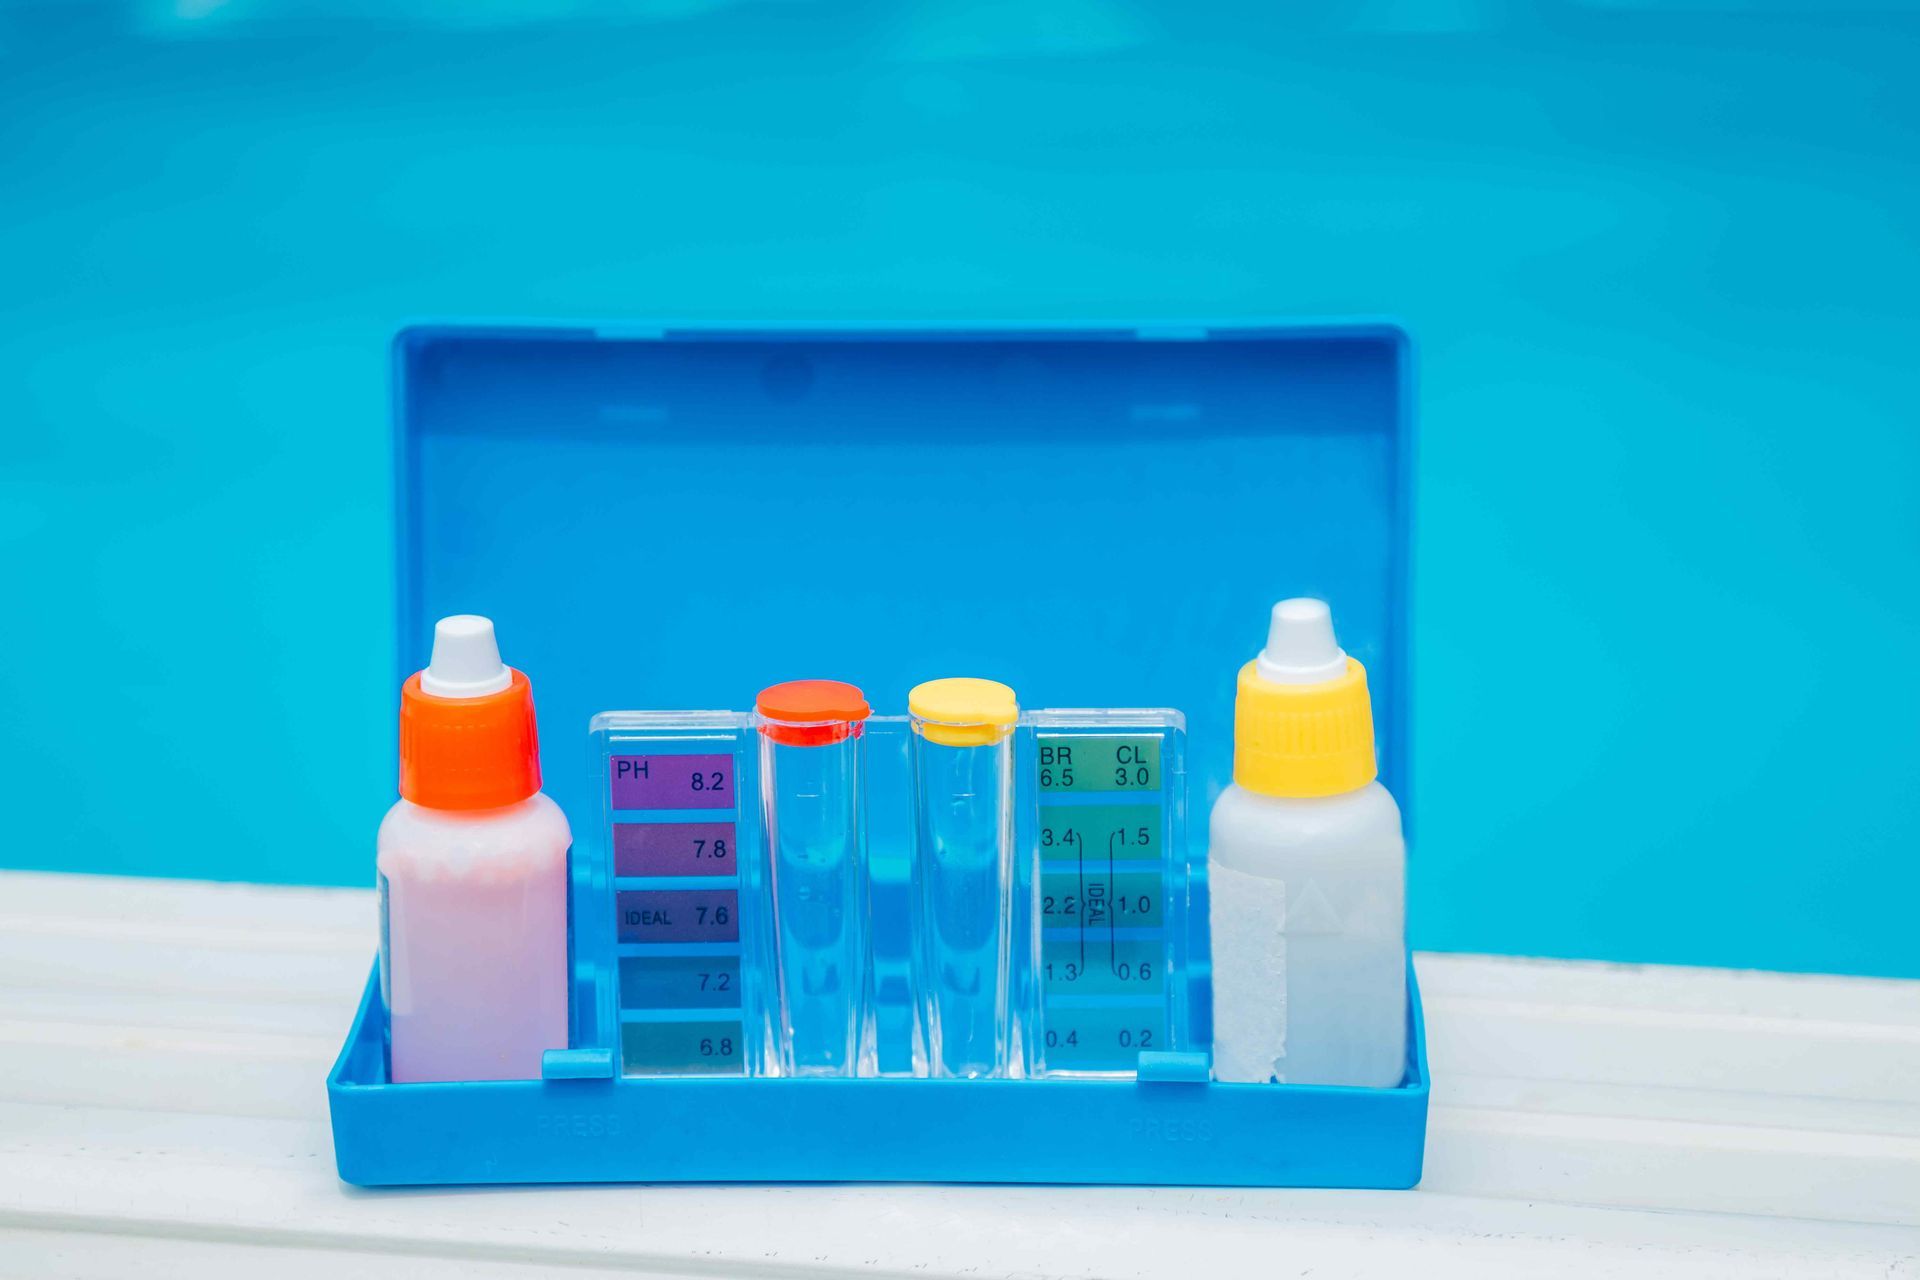 Swimming pool chemical testing kit